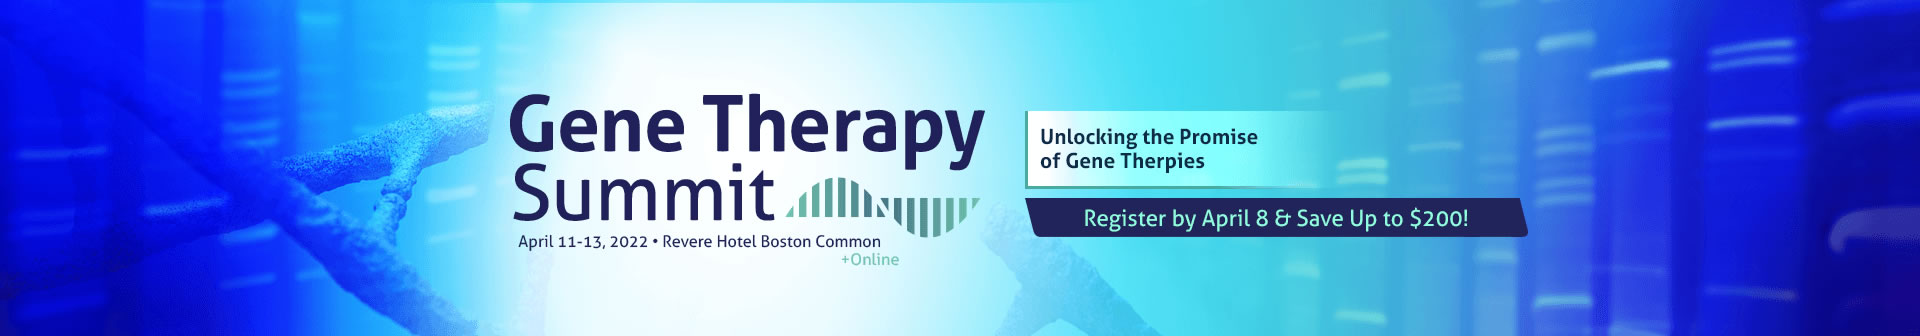 Gene Therapy Summit